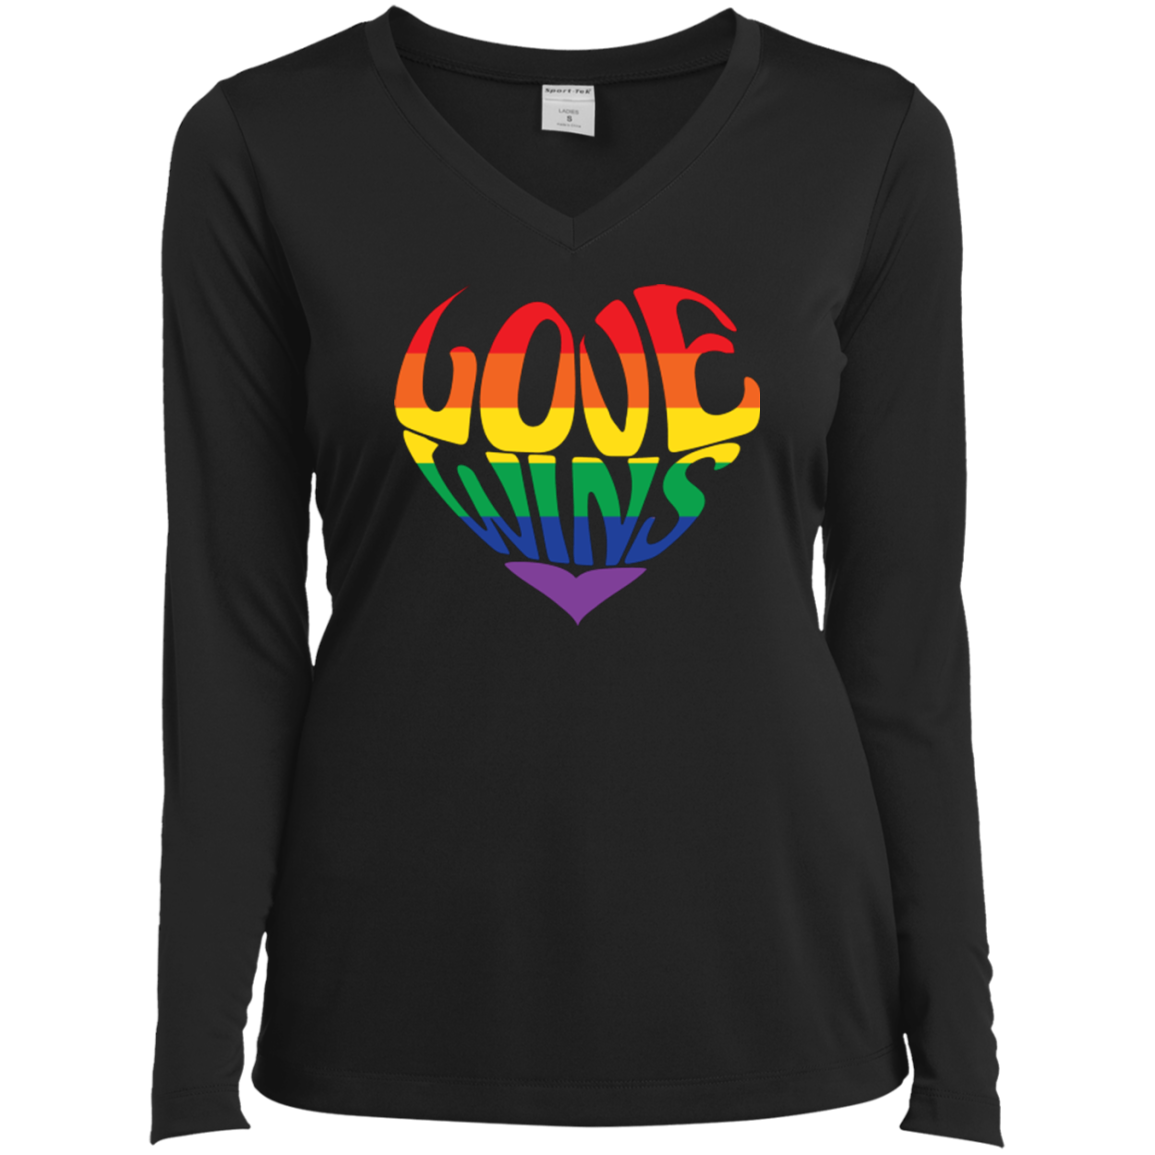 Love Wins black Full Sleeves v-neck LGBTQ Pride Tshirt for women